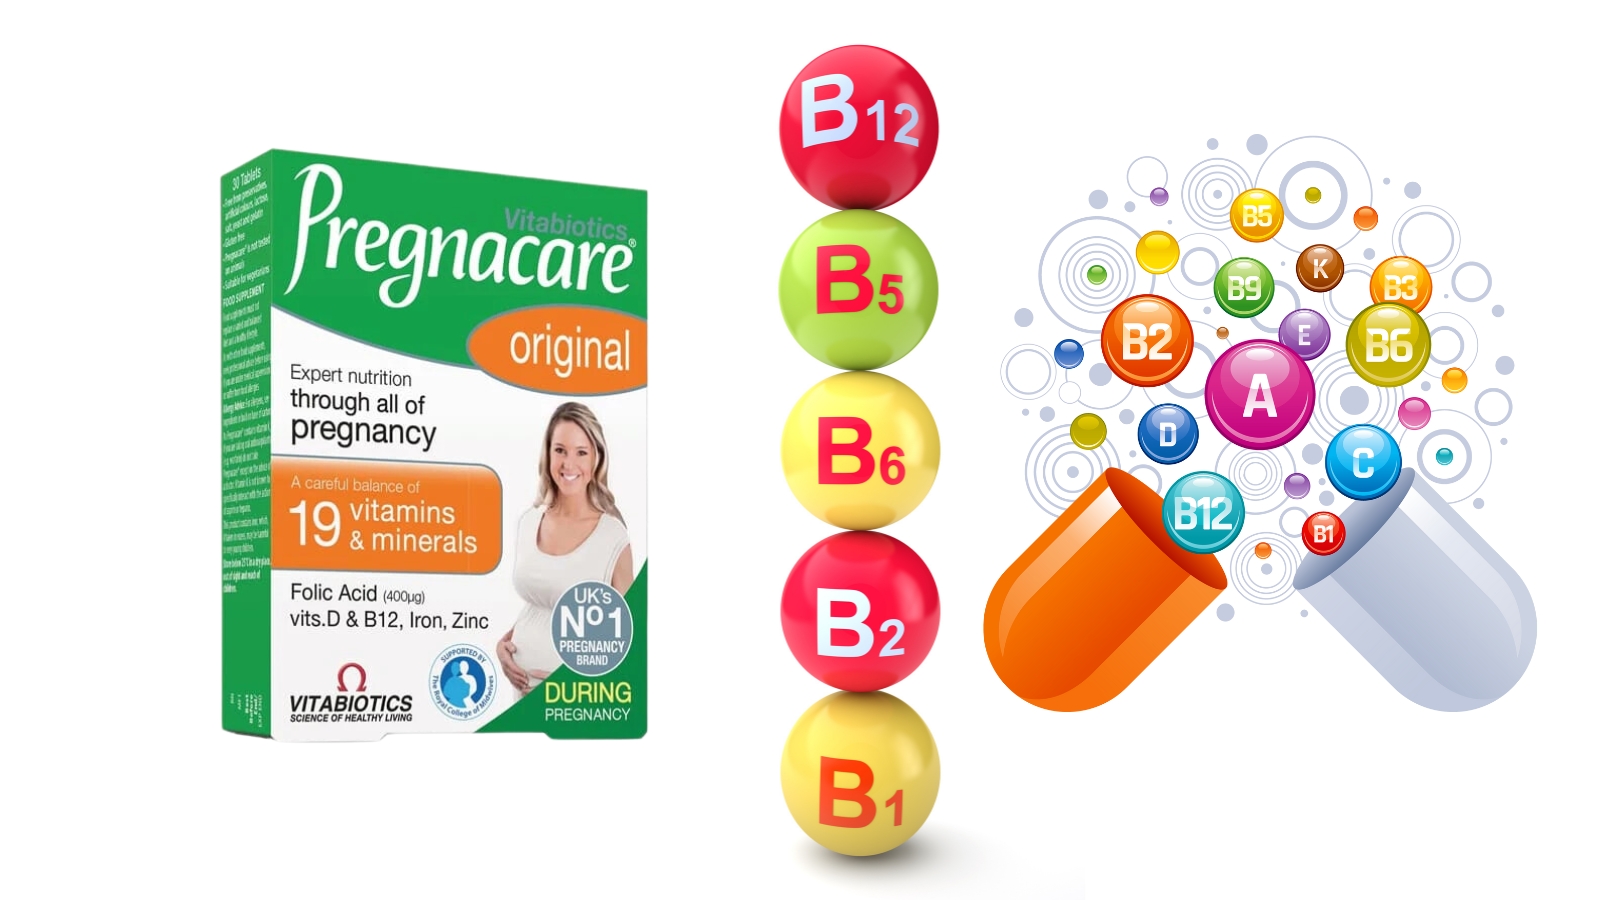  Pregnacare Original bổ sung 19 loại Vitamin và khoáng chất cần thiết